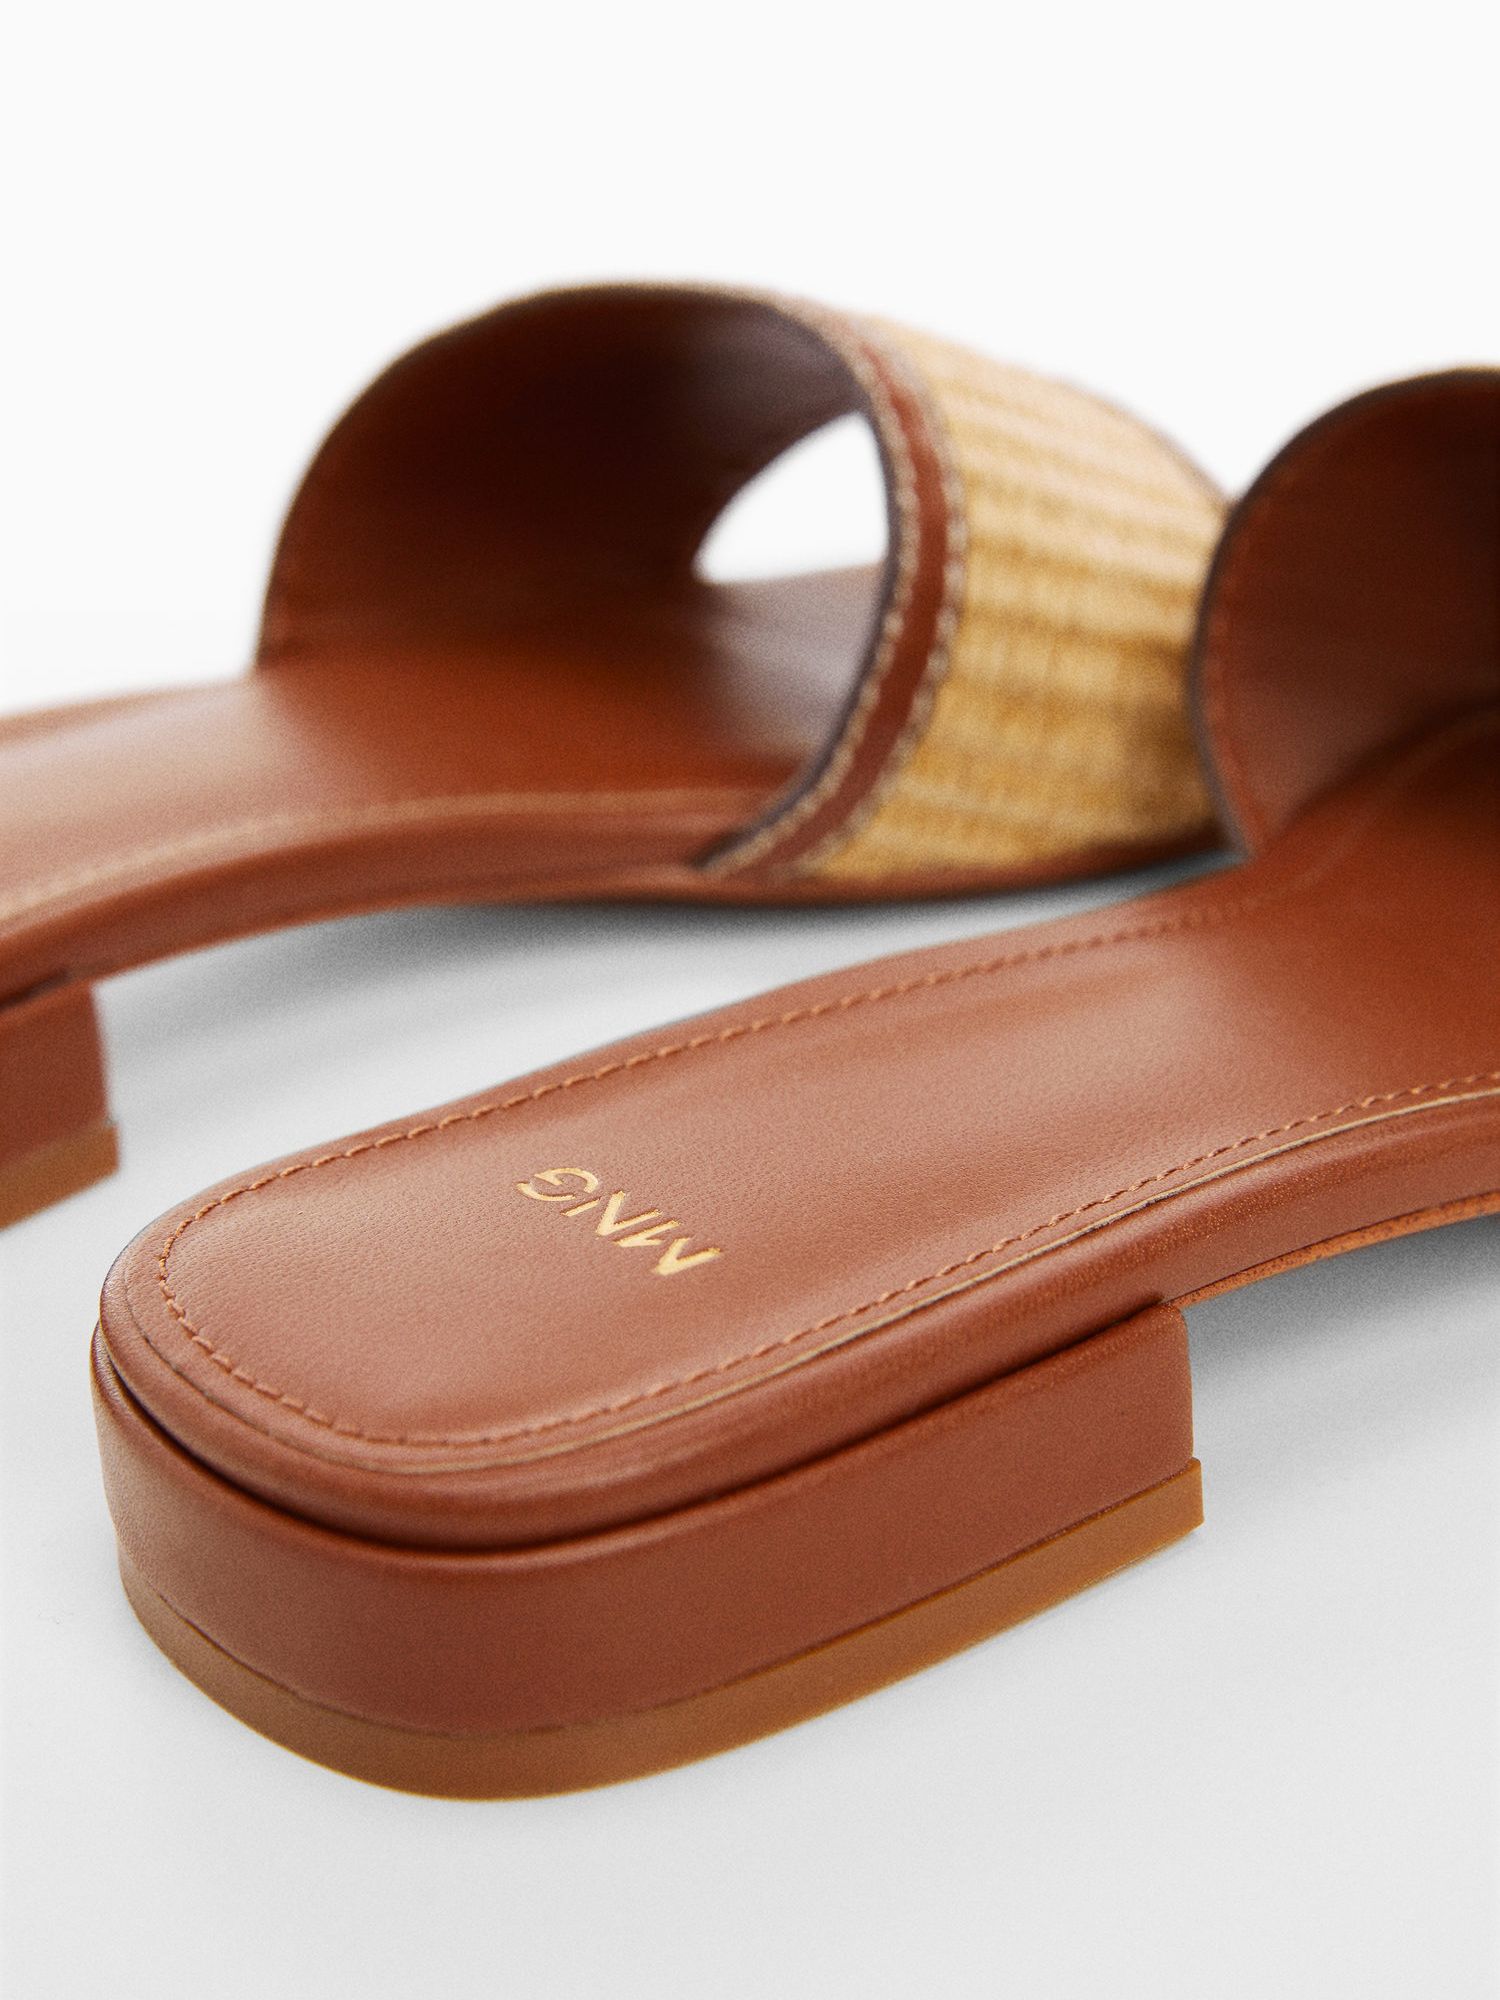 Buy Mango Pala Raffia Strap Sandals, Medium Brown Online at johnlewis.com